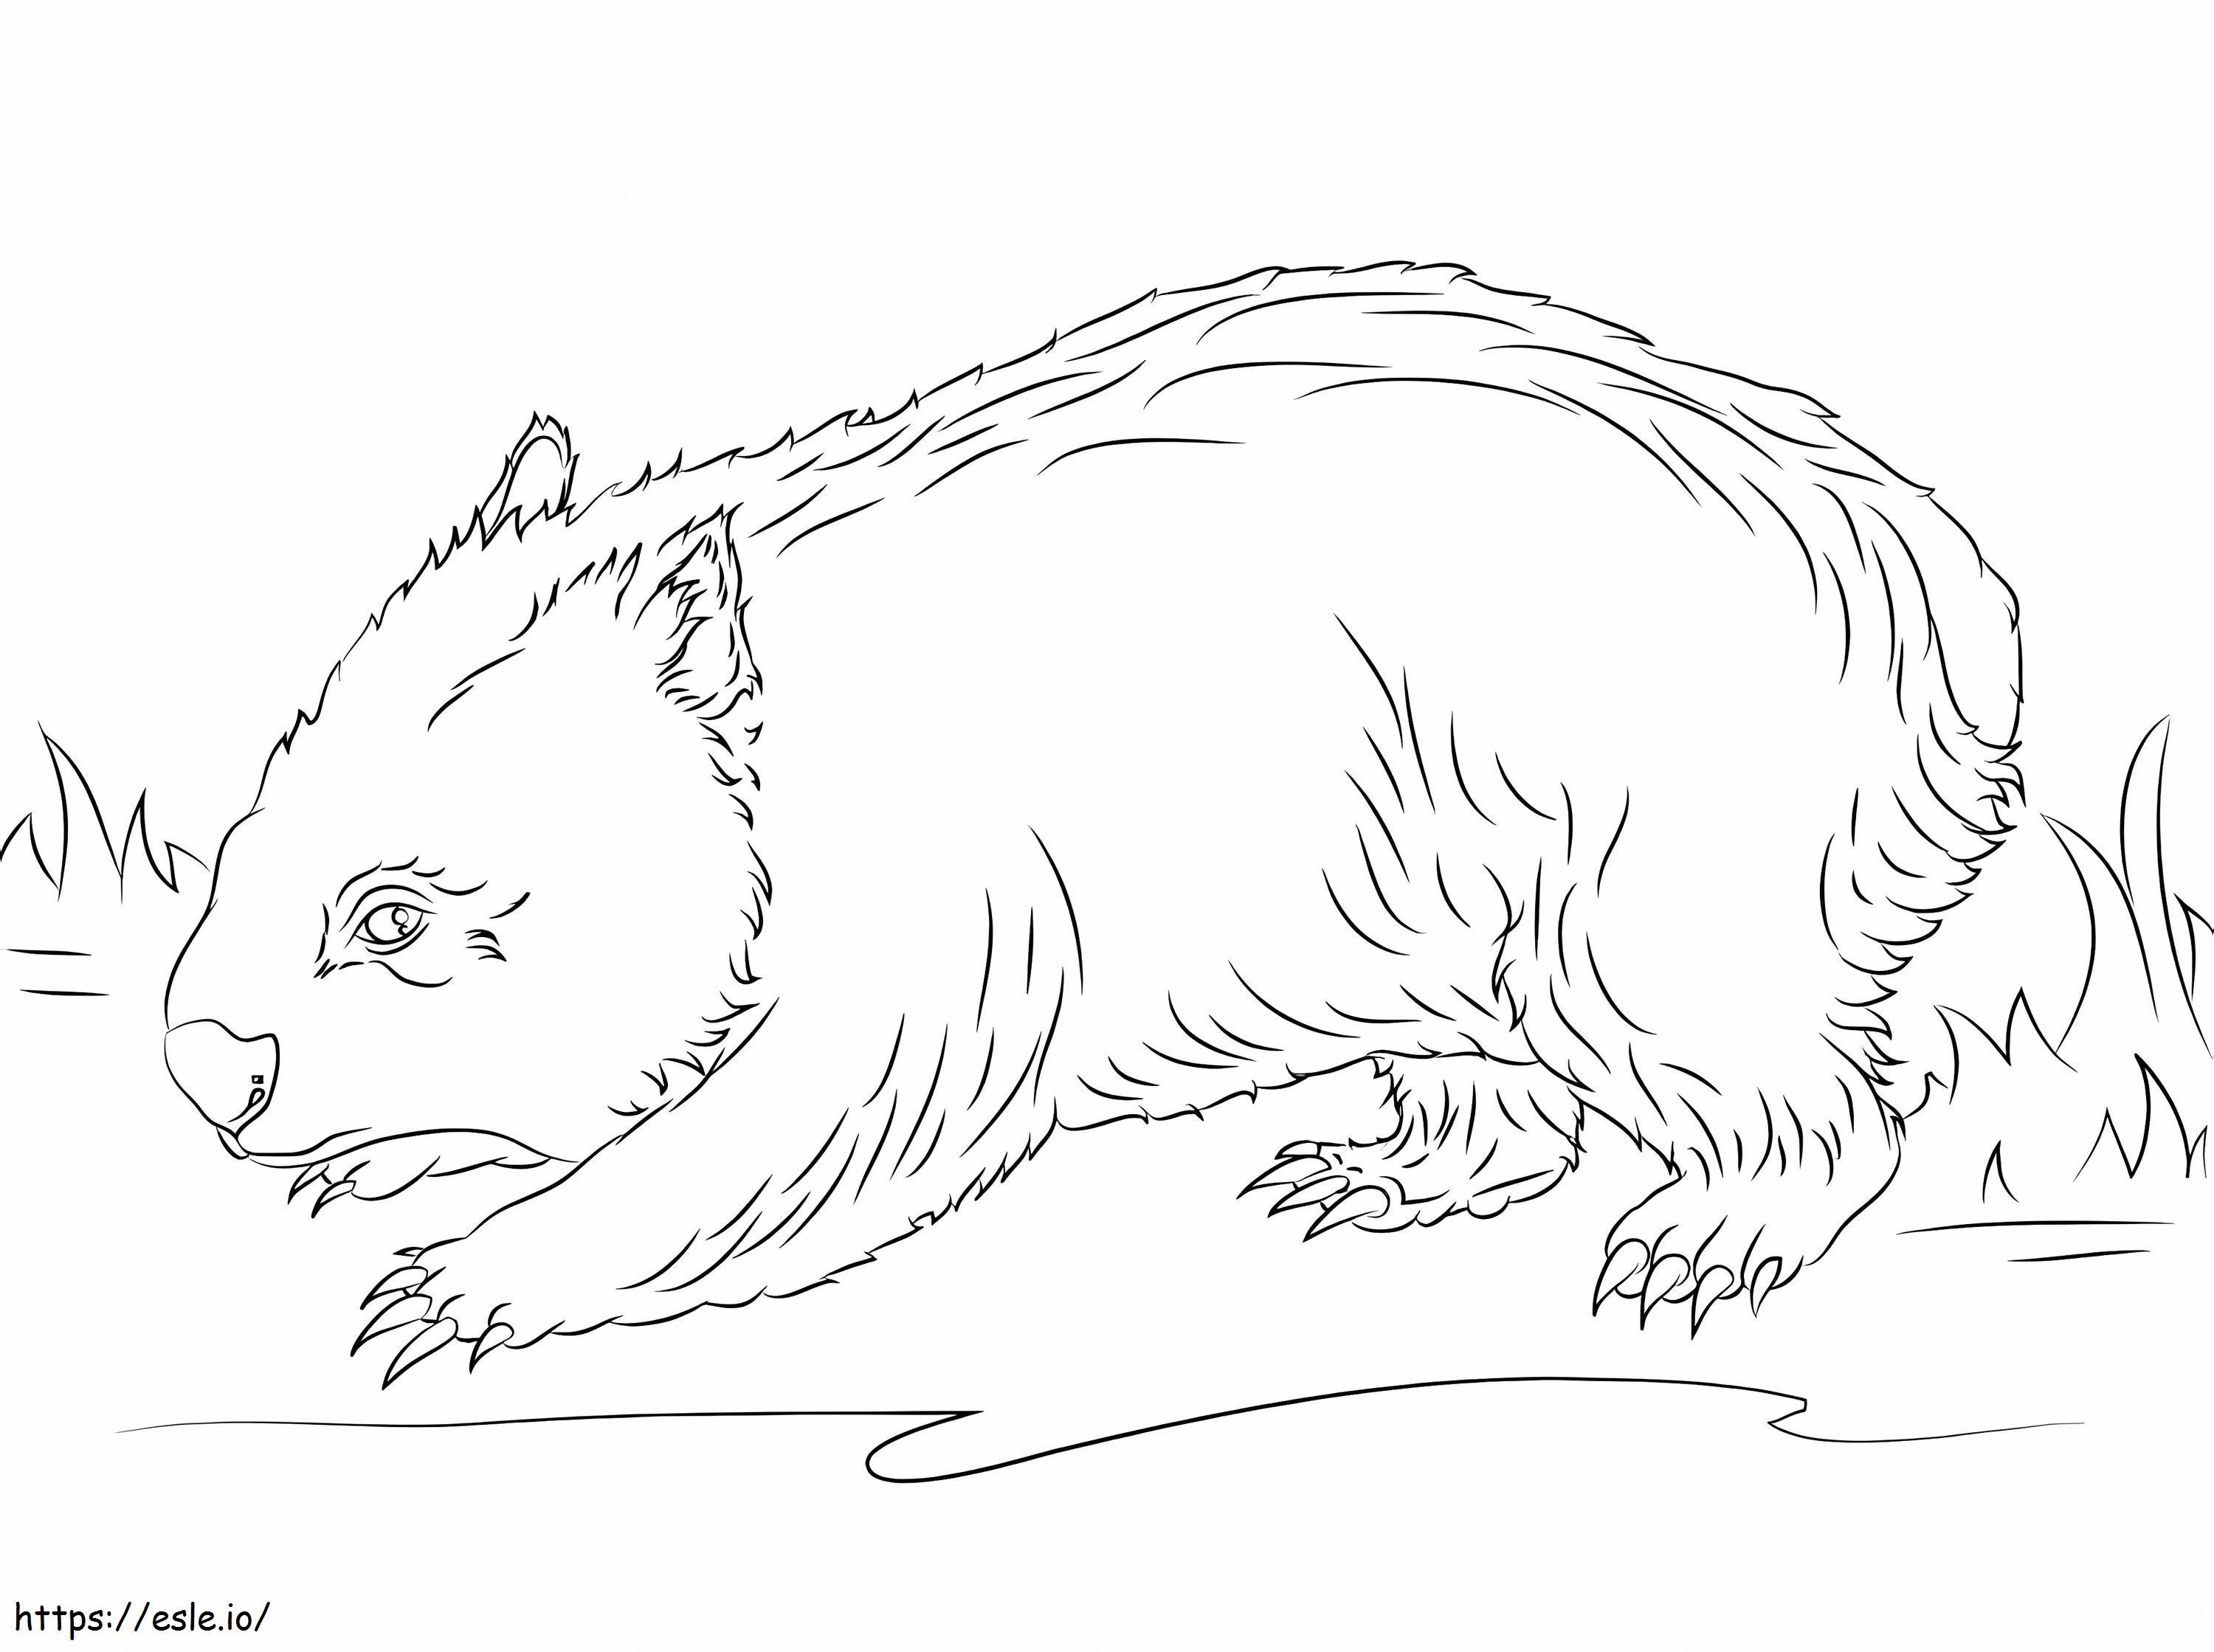 Normaler Wombat ausmalbilder